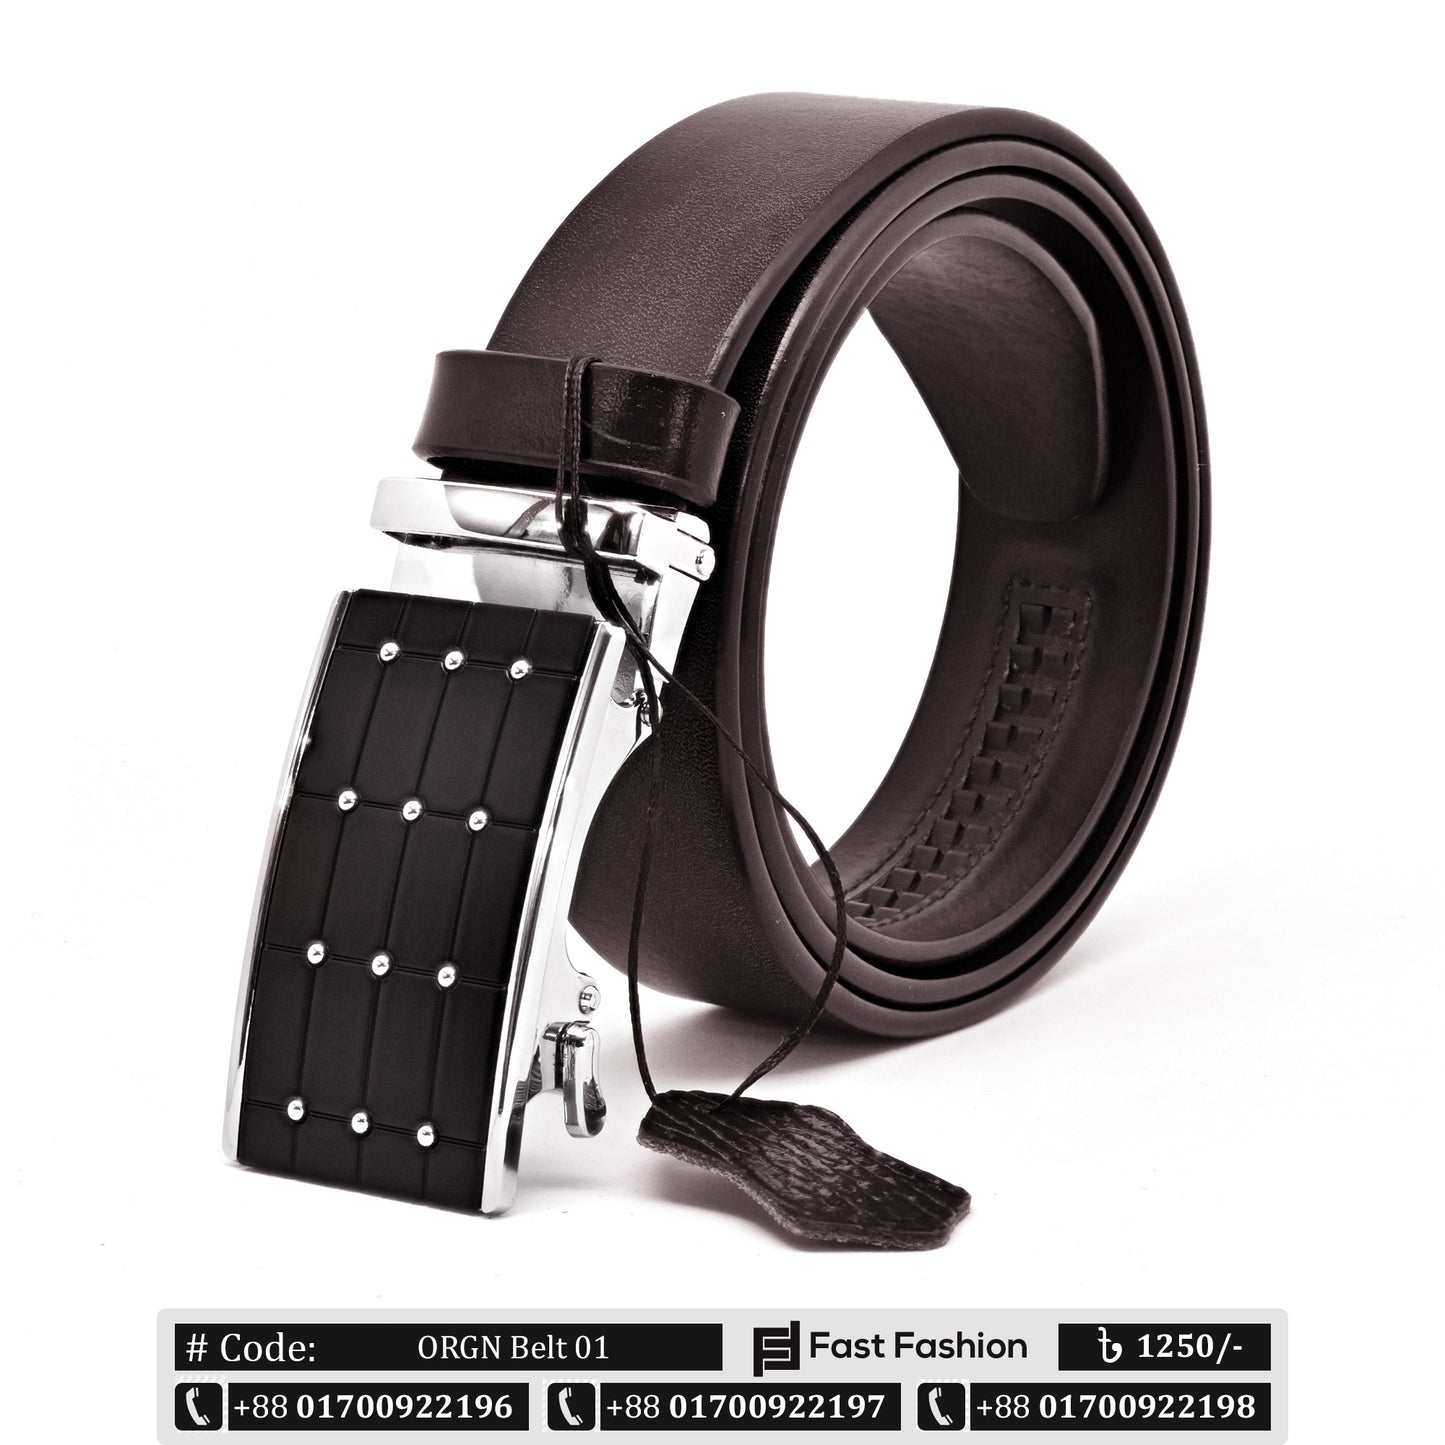 Premium Quality Original Leather Belt - ORGN Belt 01